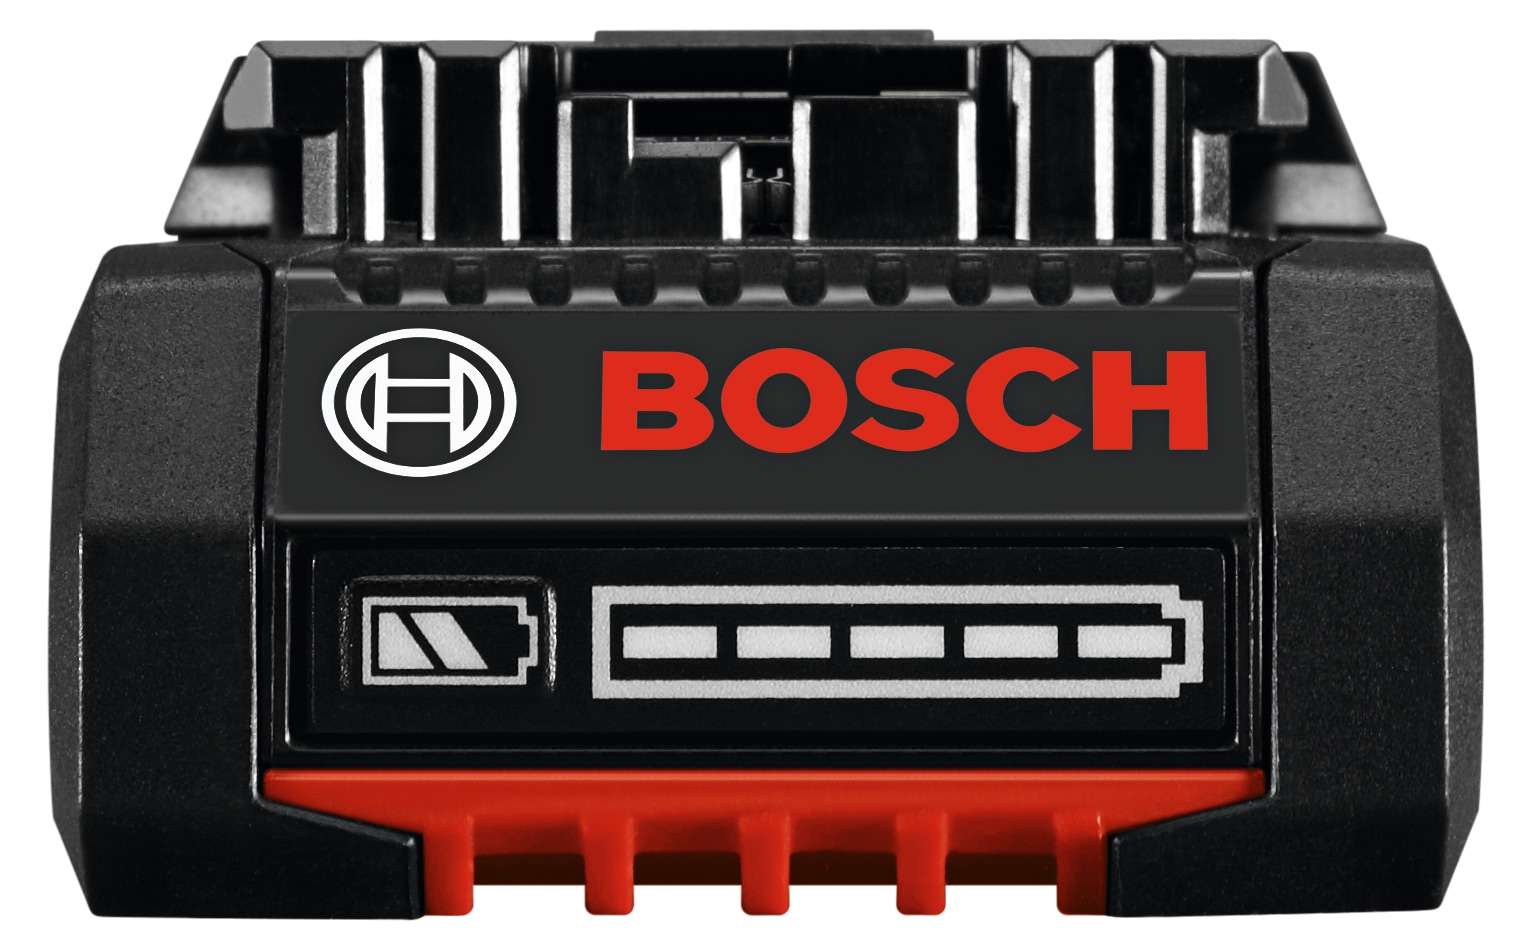 Bosch Home & Garden Batterie PBA 18V lithium-ion (18 V, 2.50 Ah) - Galaxus